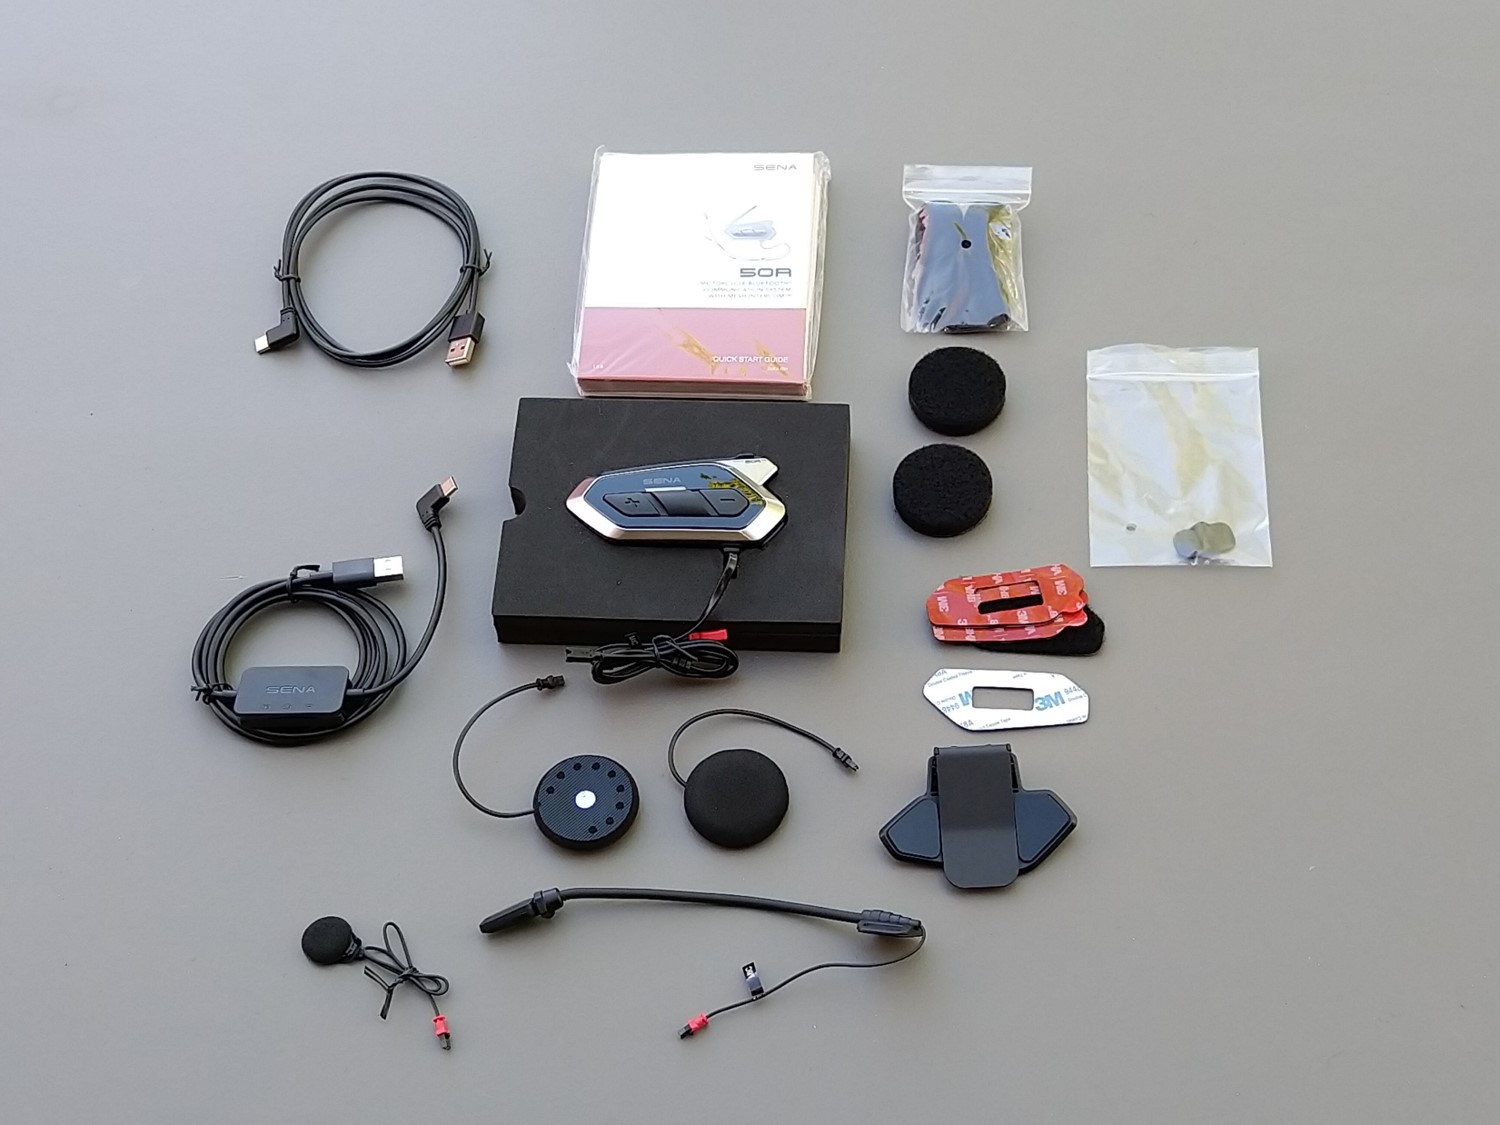 Sena 50S and 50R Bluetooth/Mesh Headset Review at SpeedAddicts.com 